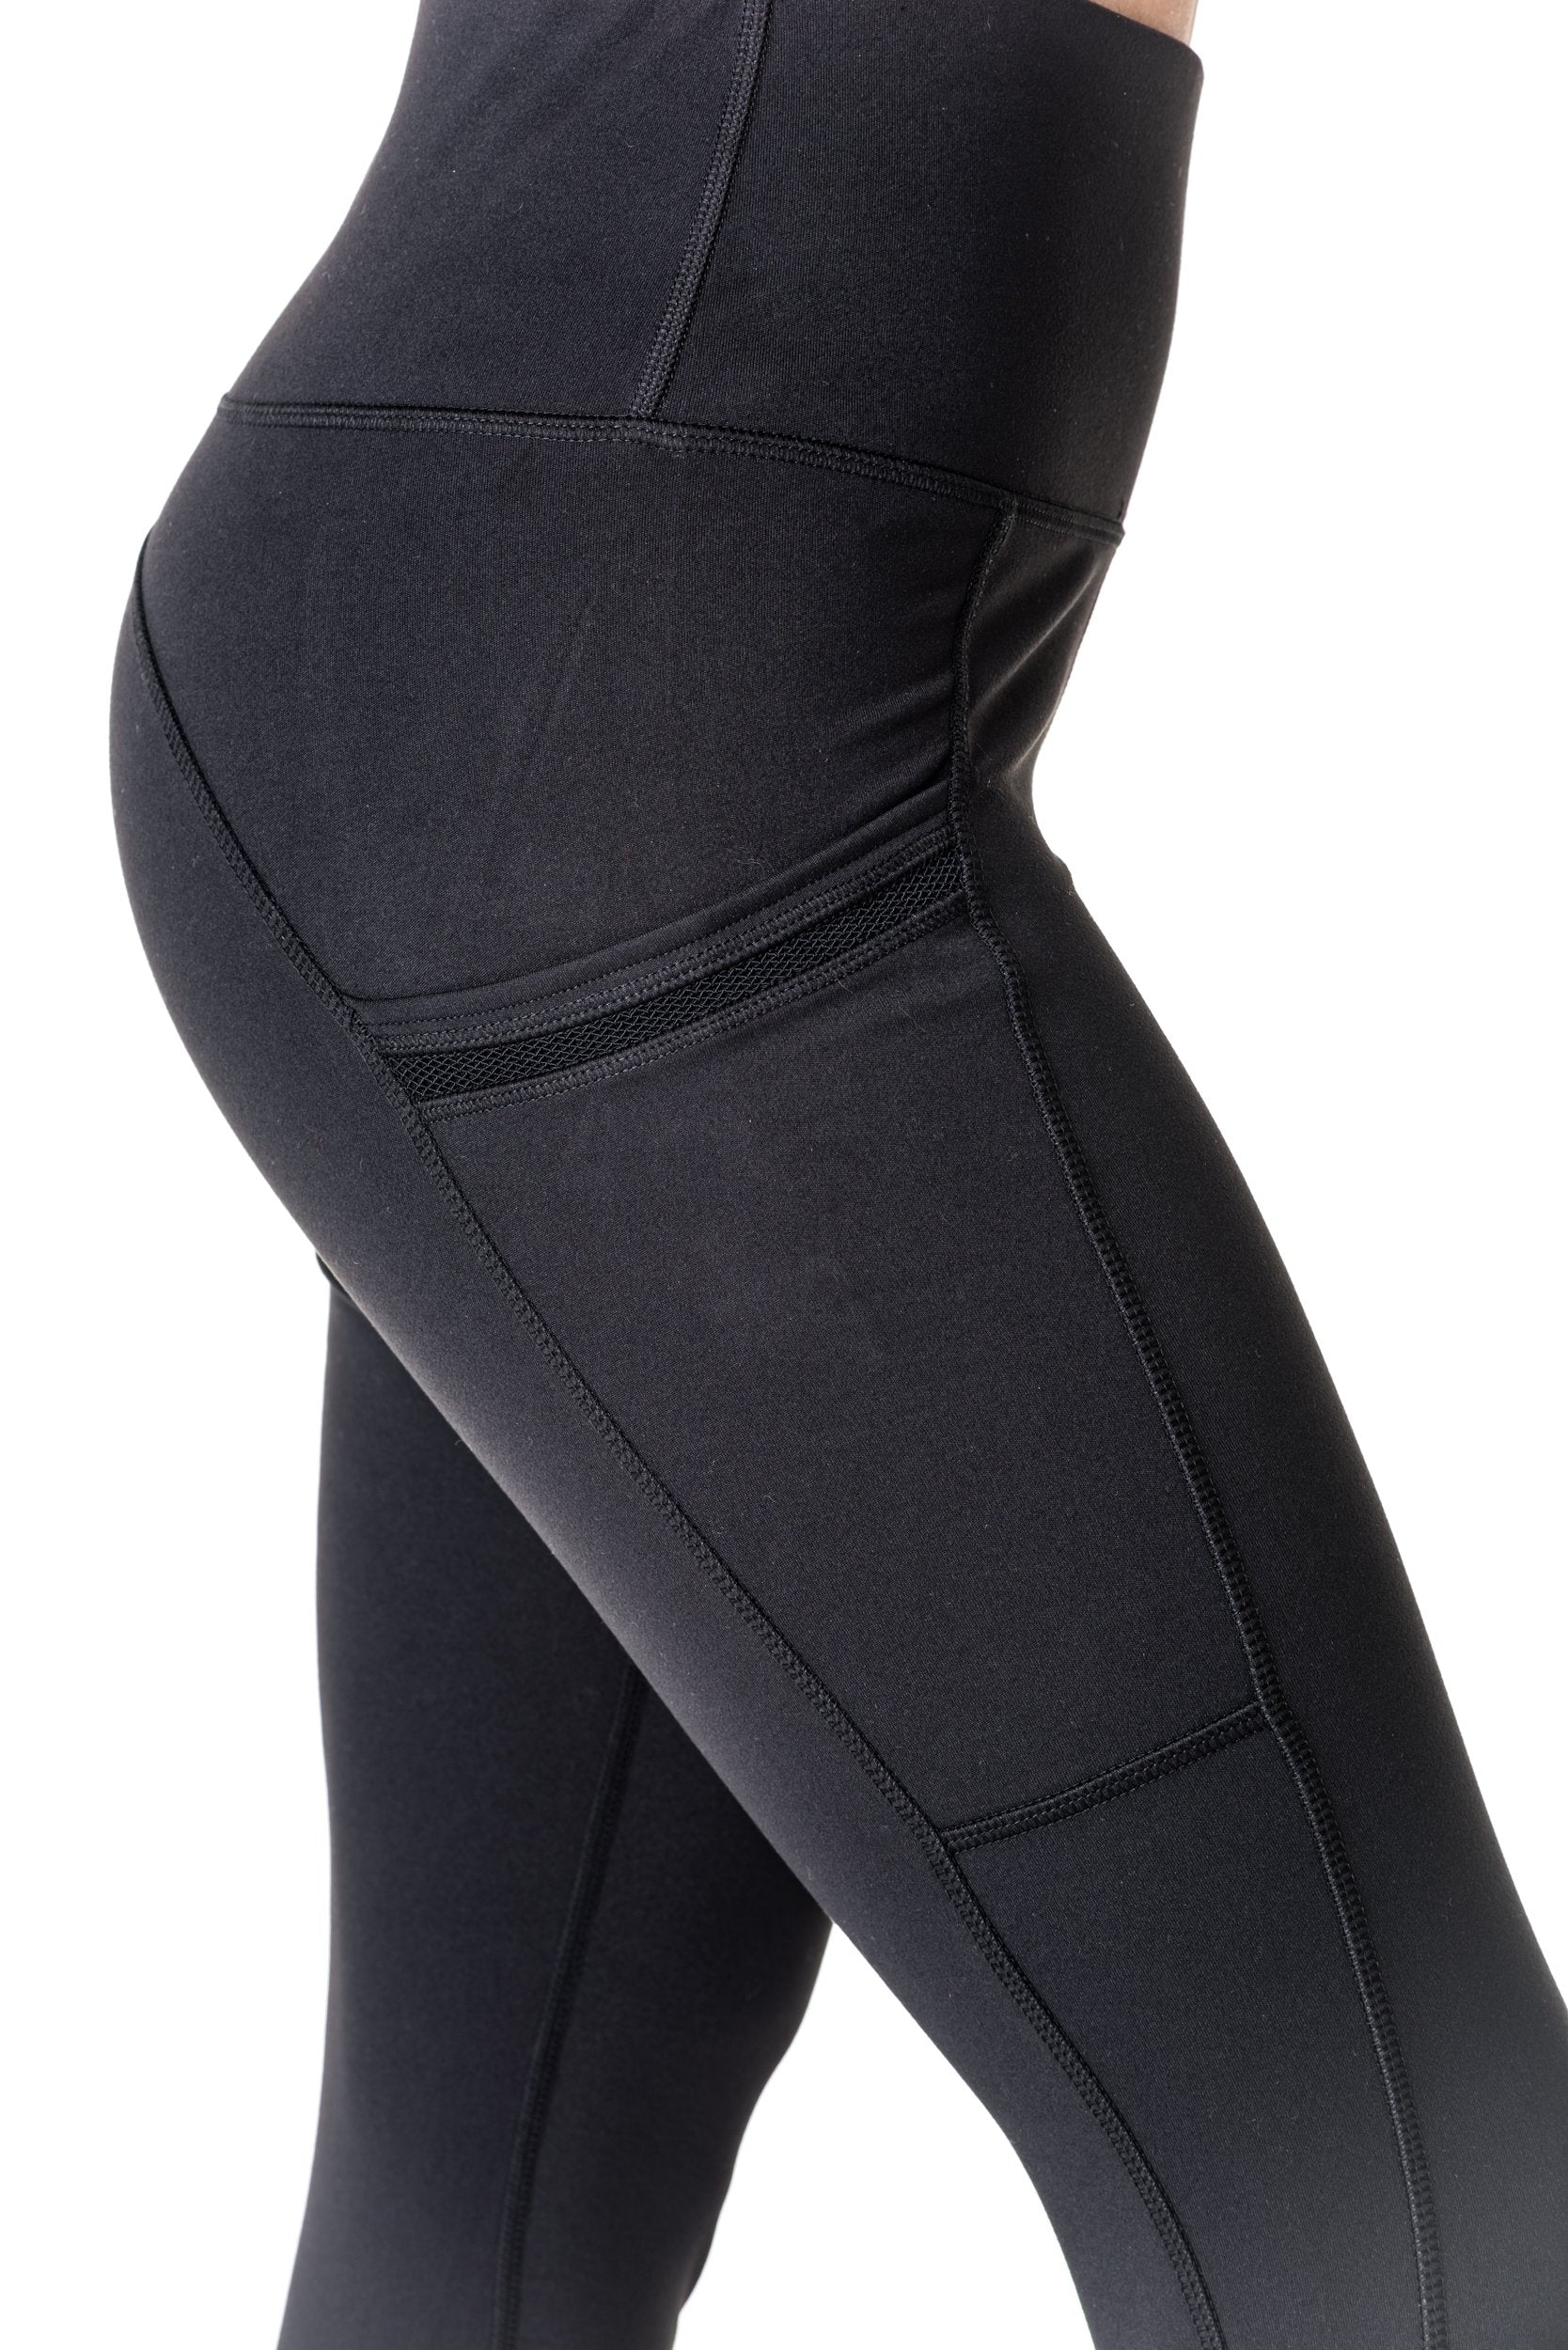 High Waist Leggings with Side Pocket - Women's (550AW)